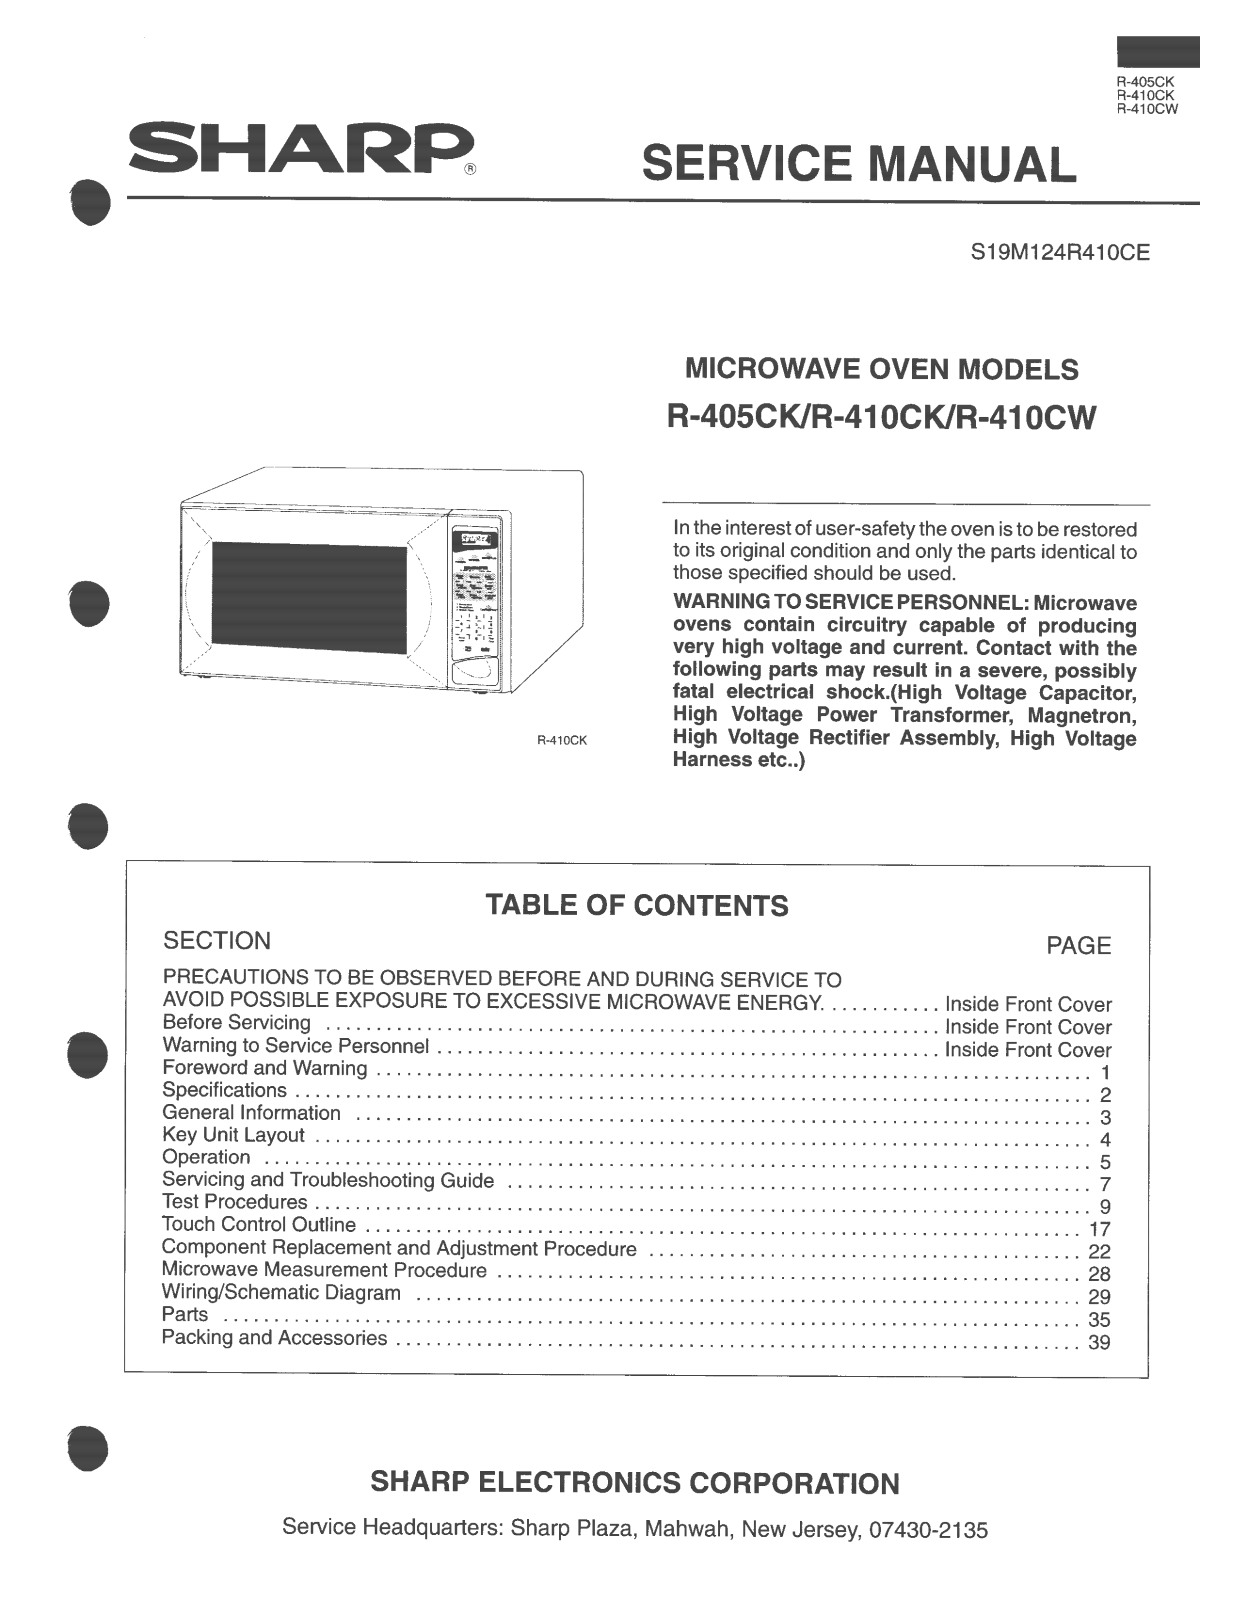 SHARP R405CK, R-410Ck, R-410CW Service Manual